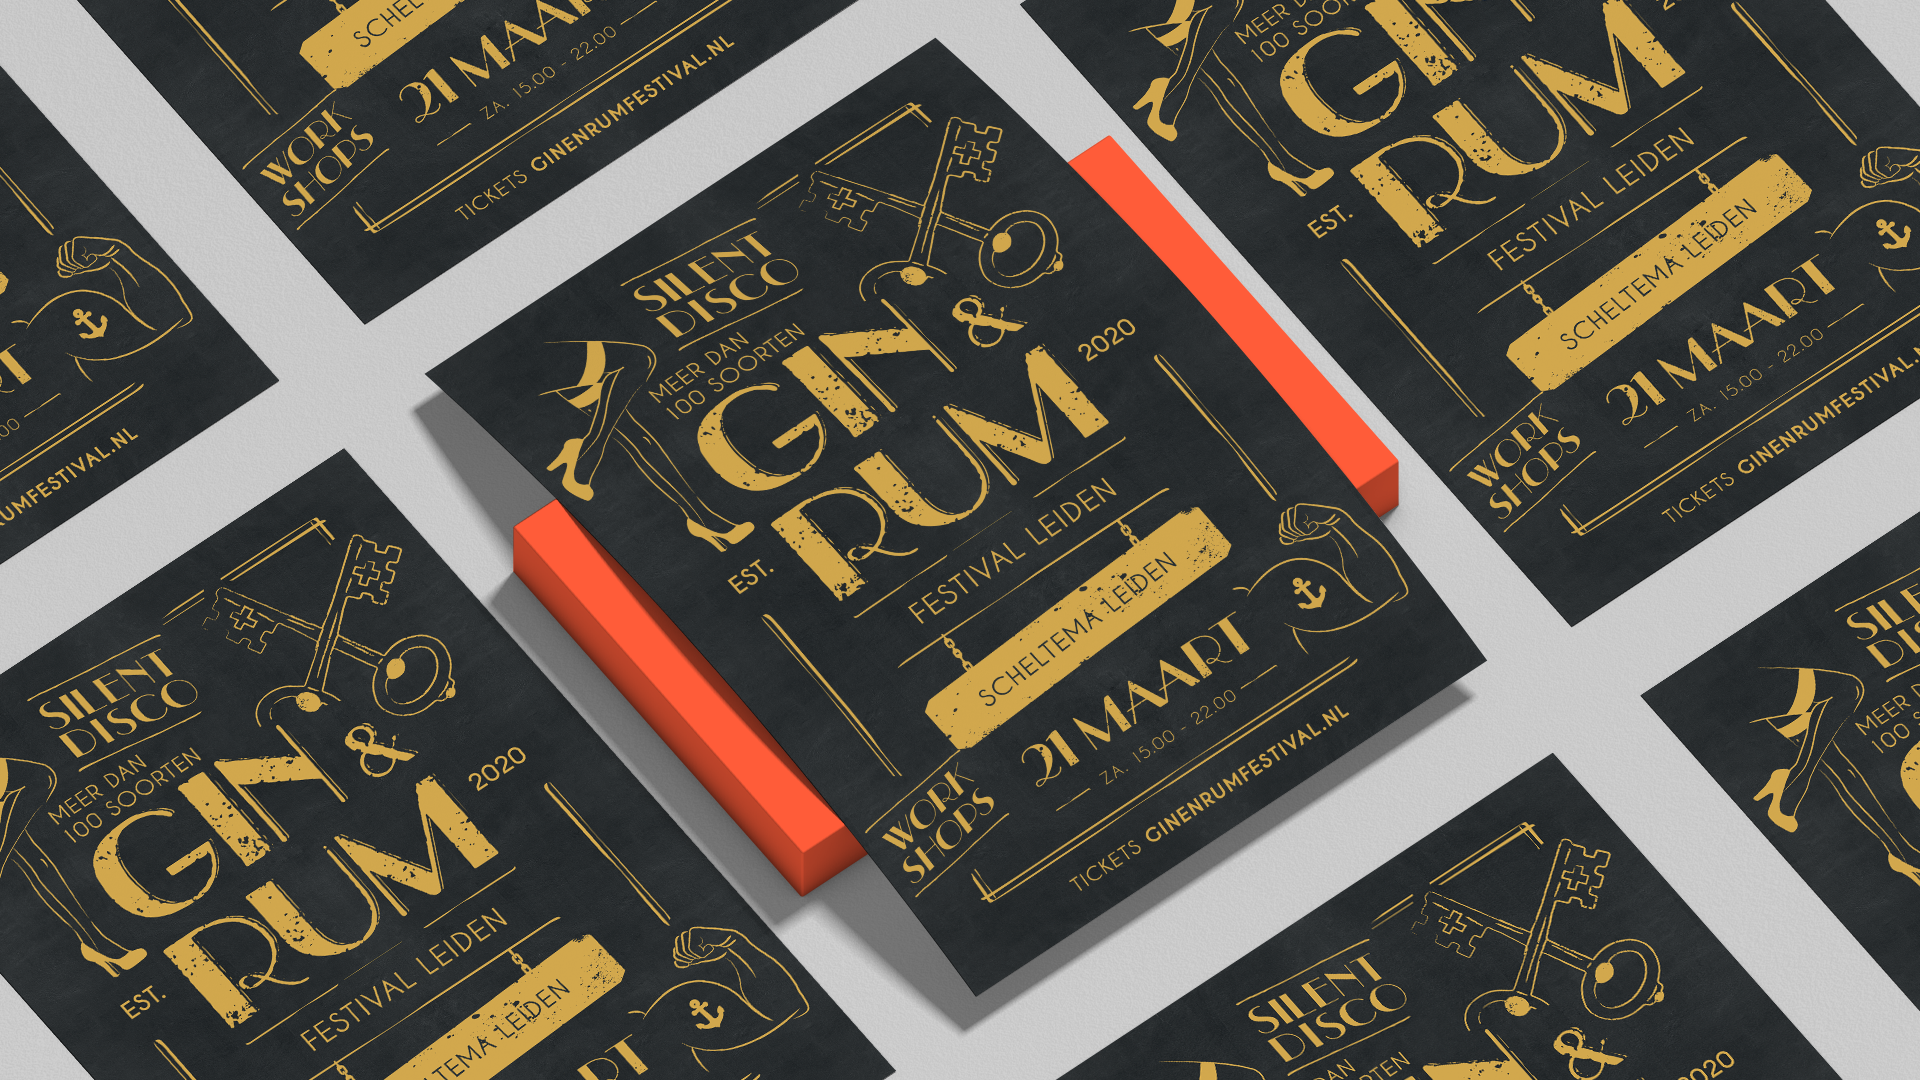 Gin en Rum festival poster grid